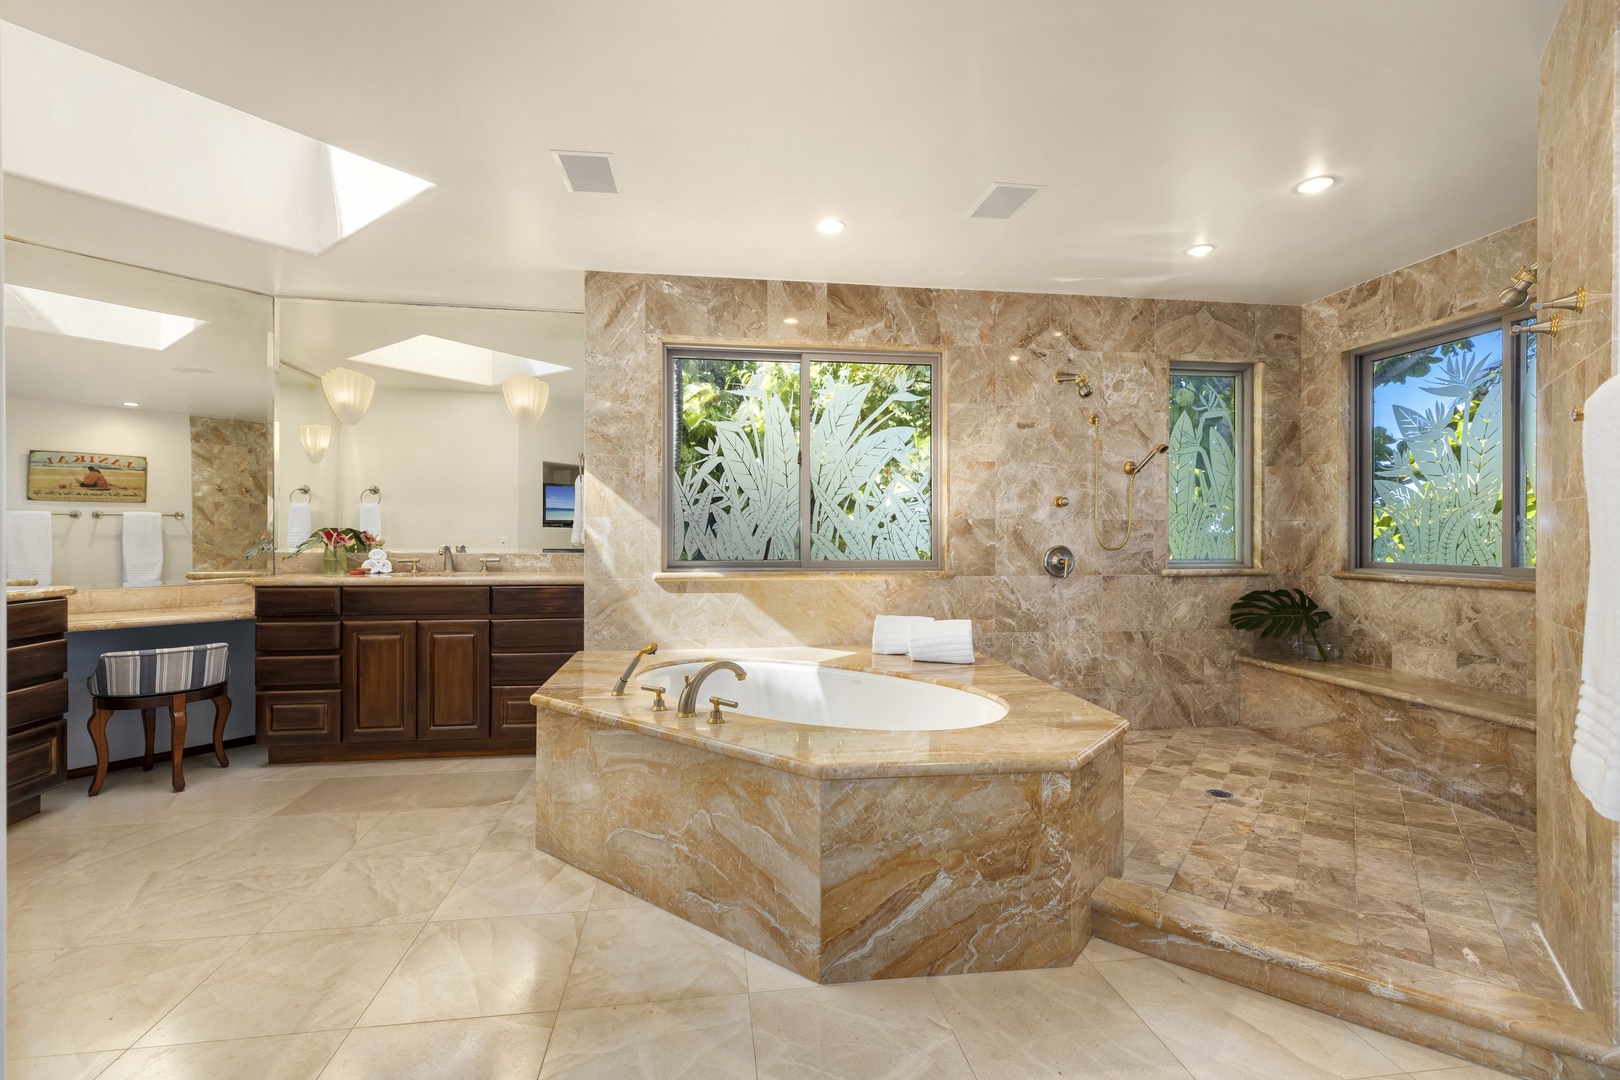 Kailua Vacation Rentals, Mokulua Sunrise - The shower/tub combo is enclosed with decorative glass doors